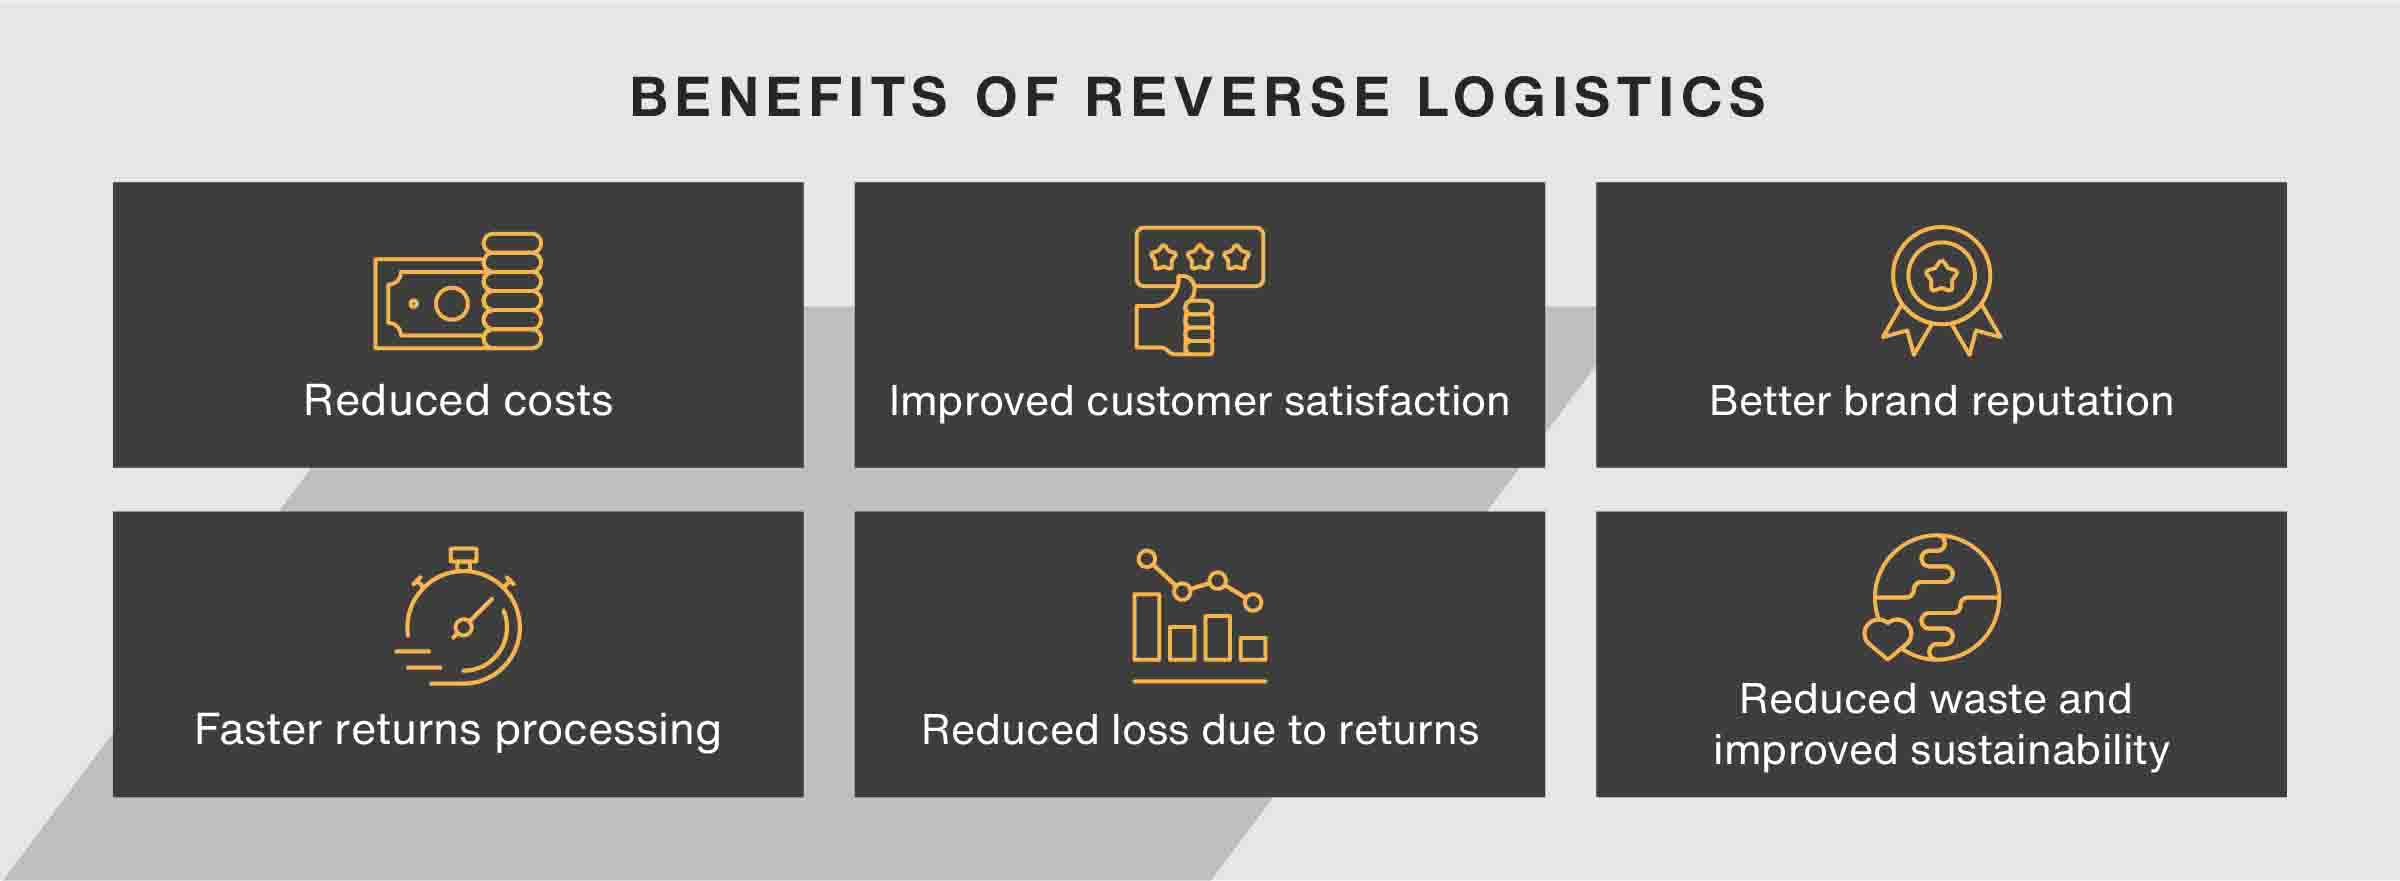 Benefits of Reverse Logistics